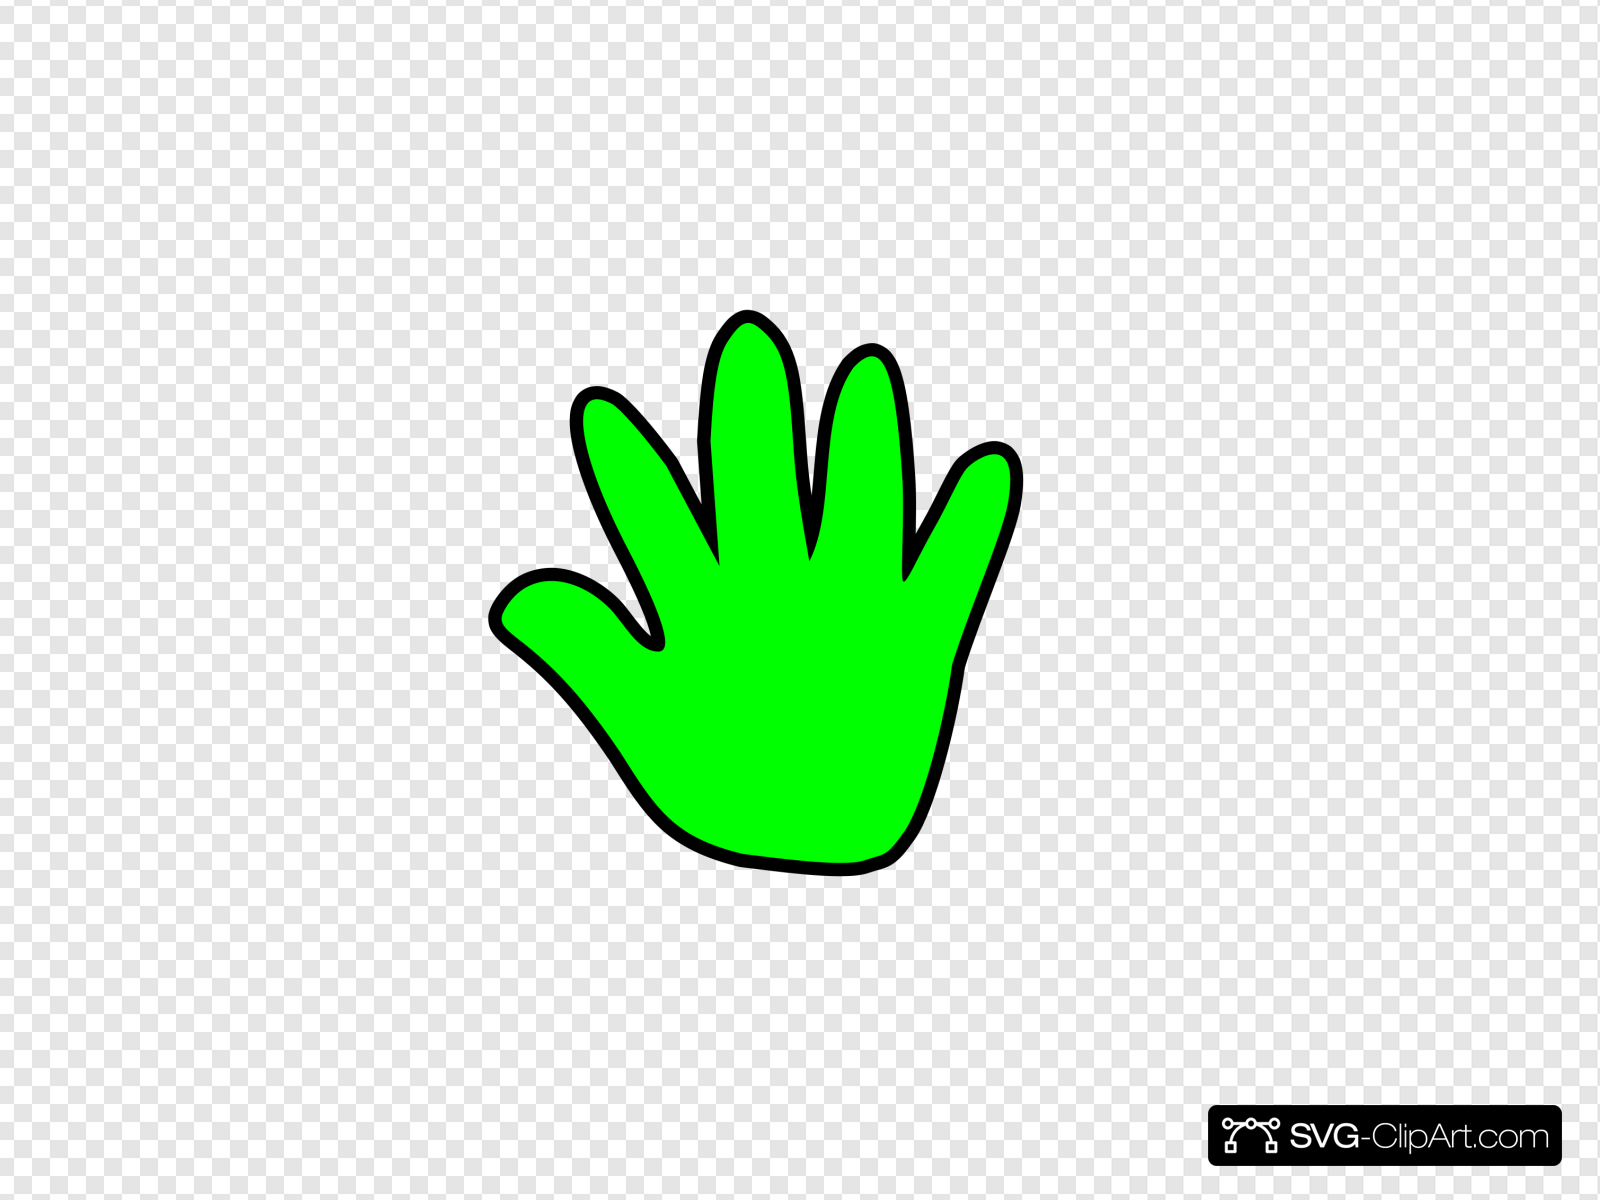 Child Handprint Green Clip art, Icon and SVG